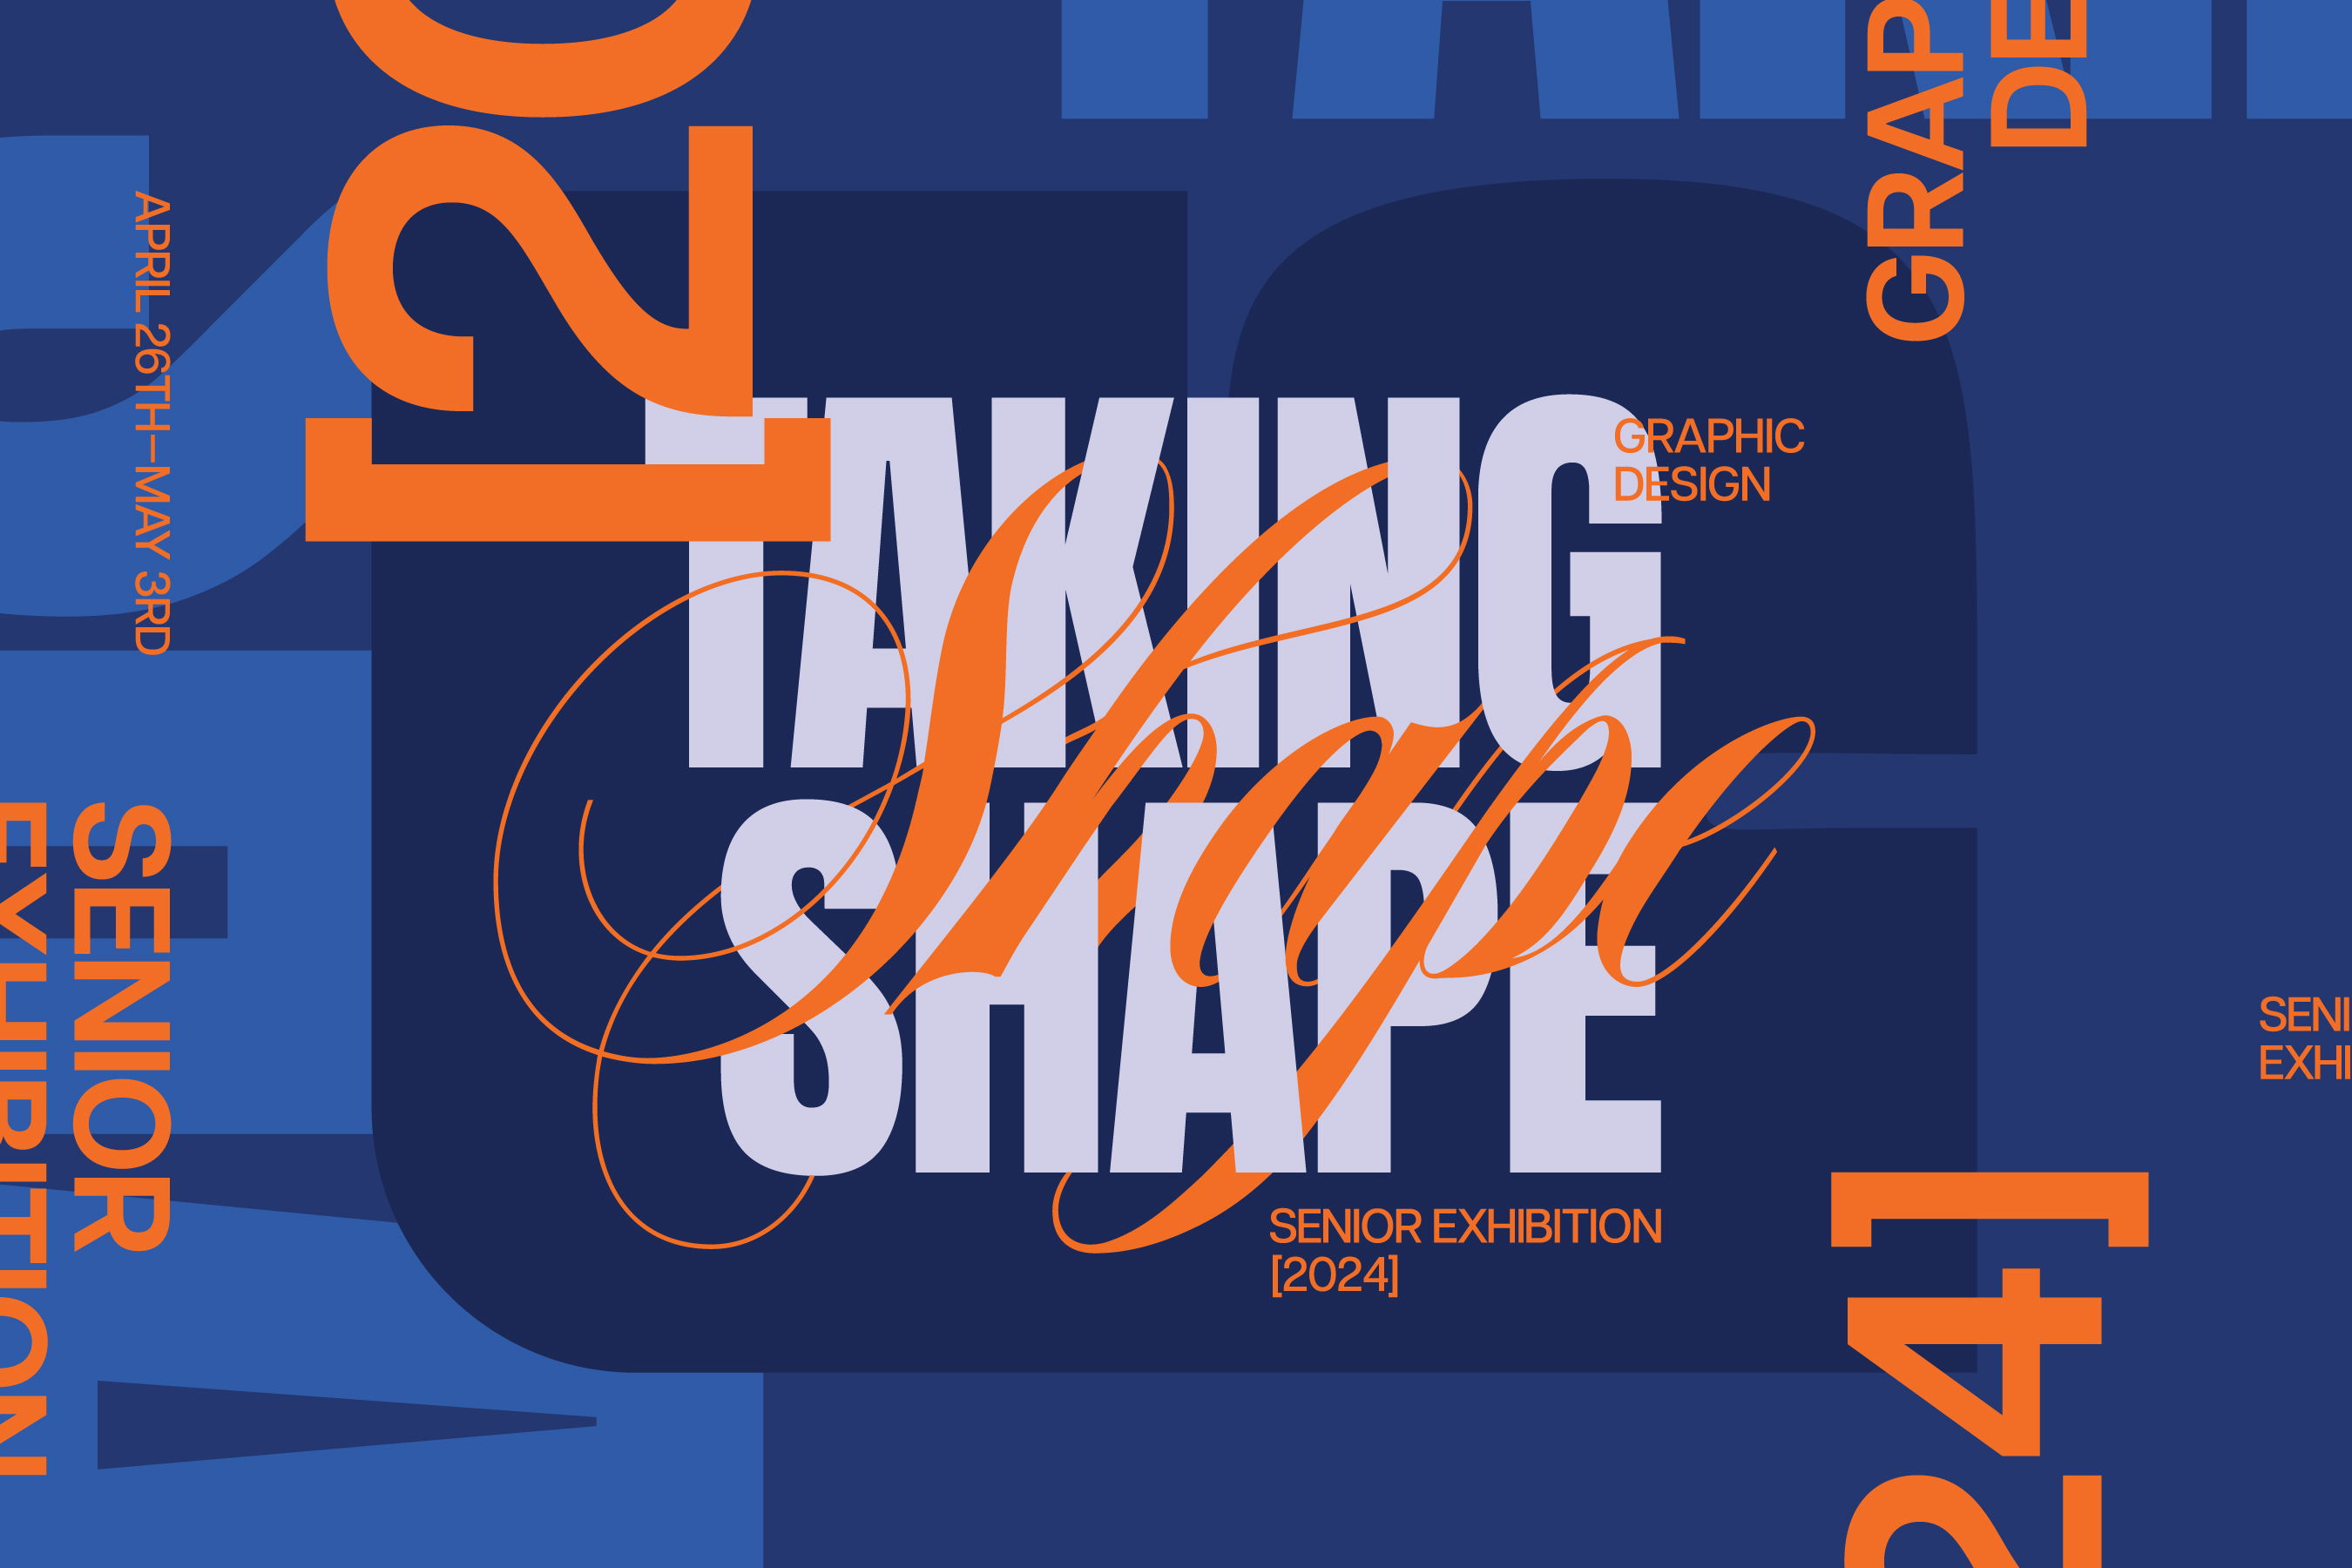 Taking_Shape_2024_Graphic_Design_Senior_Exhibition.jpg